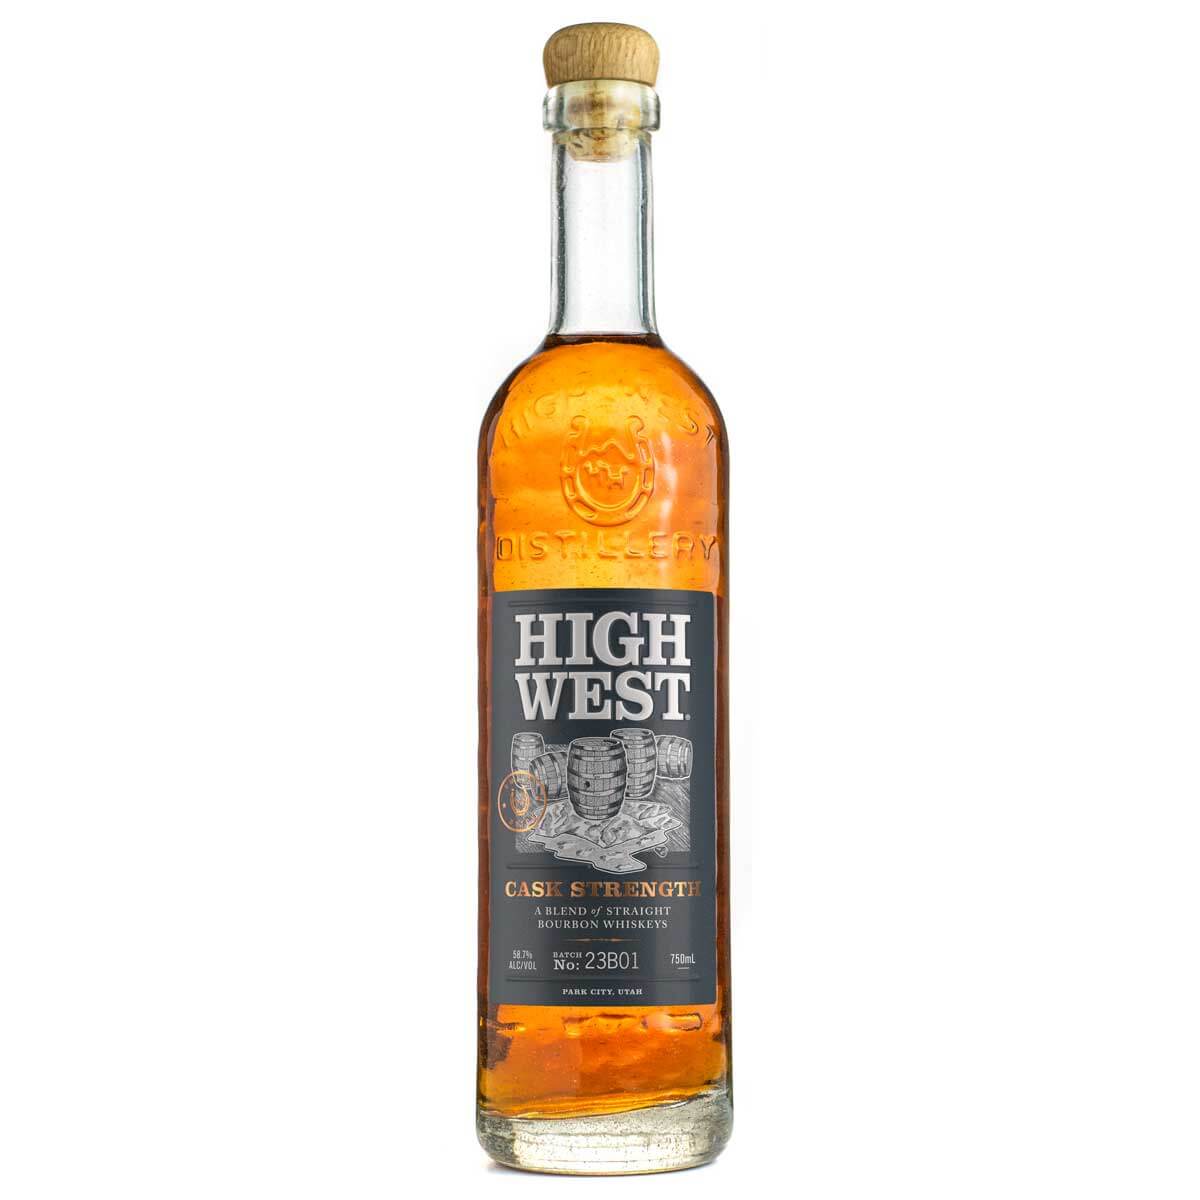 High West Cask Broadway Bourbon Liquor N Strength Wine Proof 117.4 🍇 